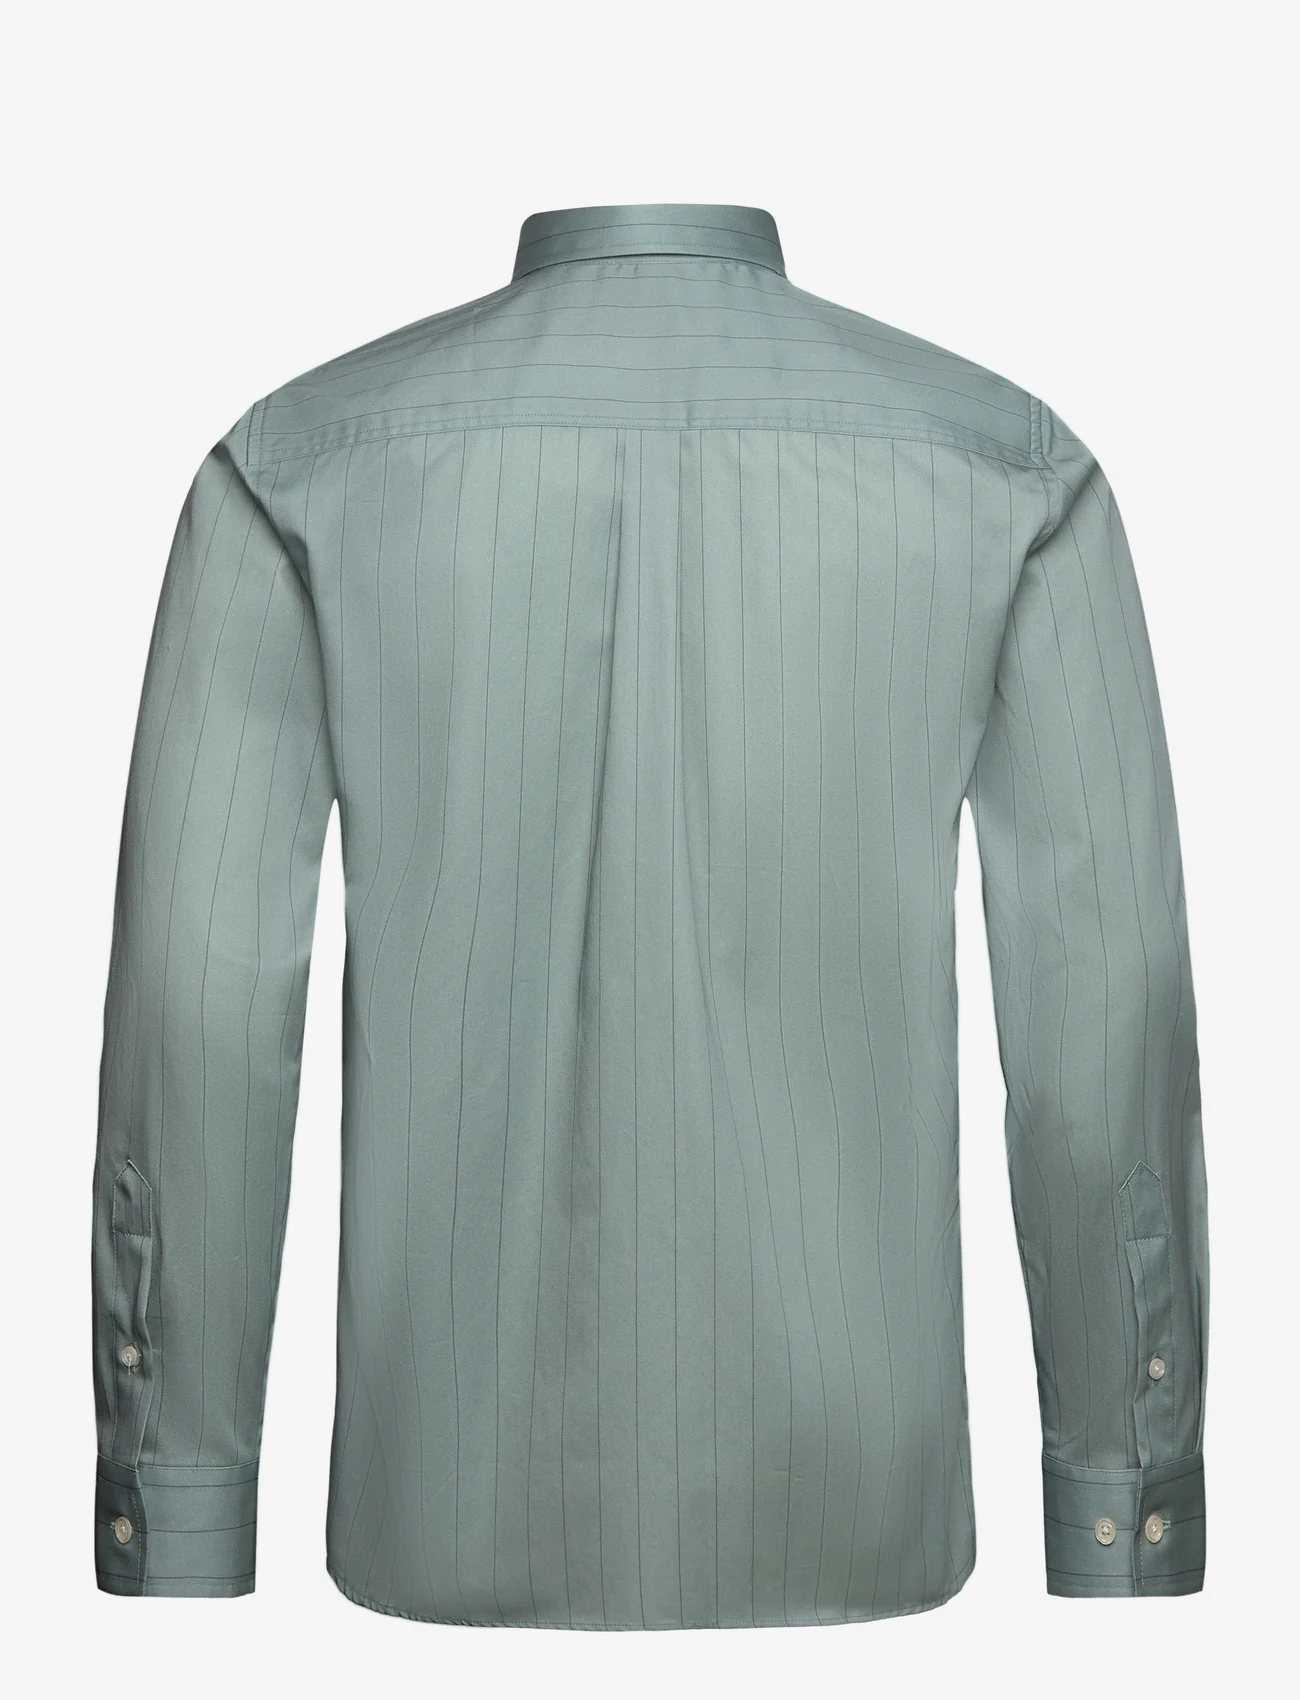 Bruuns Bazaar - SkyBBLorenzo shirt - business shirts - sage stripe - 1